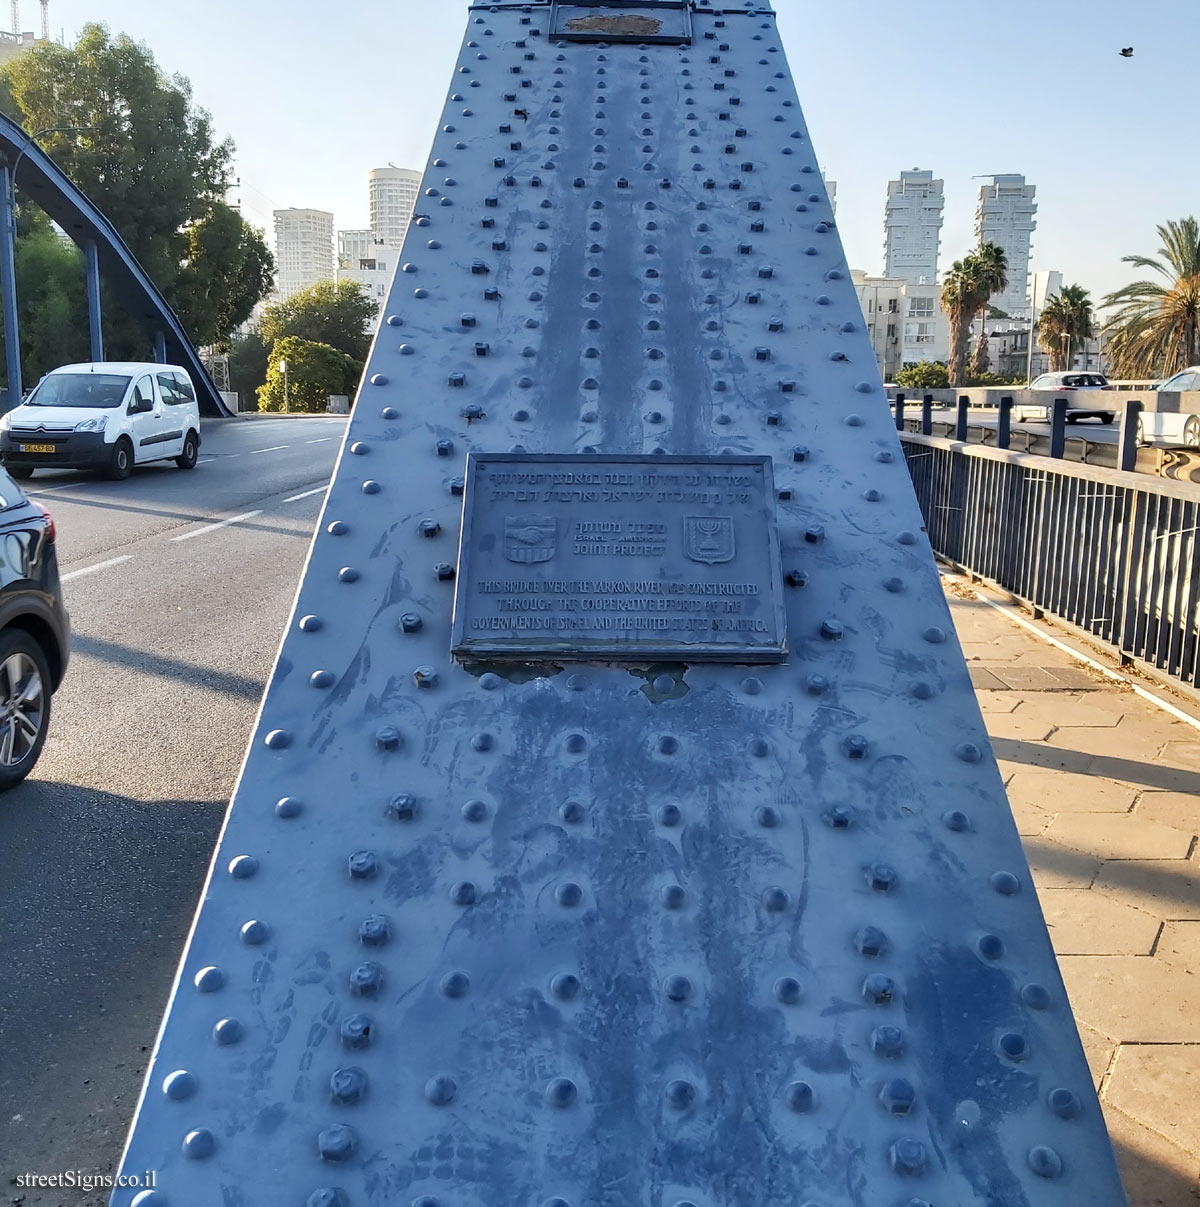 Tel Aviv - Yarkon Bridge - Mordechai Namir Rd 145, Tel Aviv-Yafo, Israel